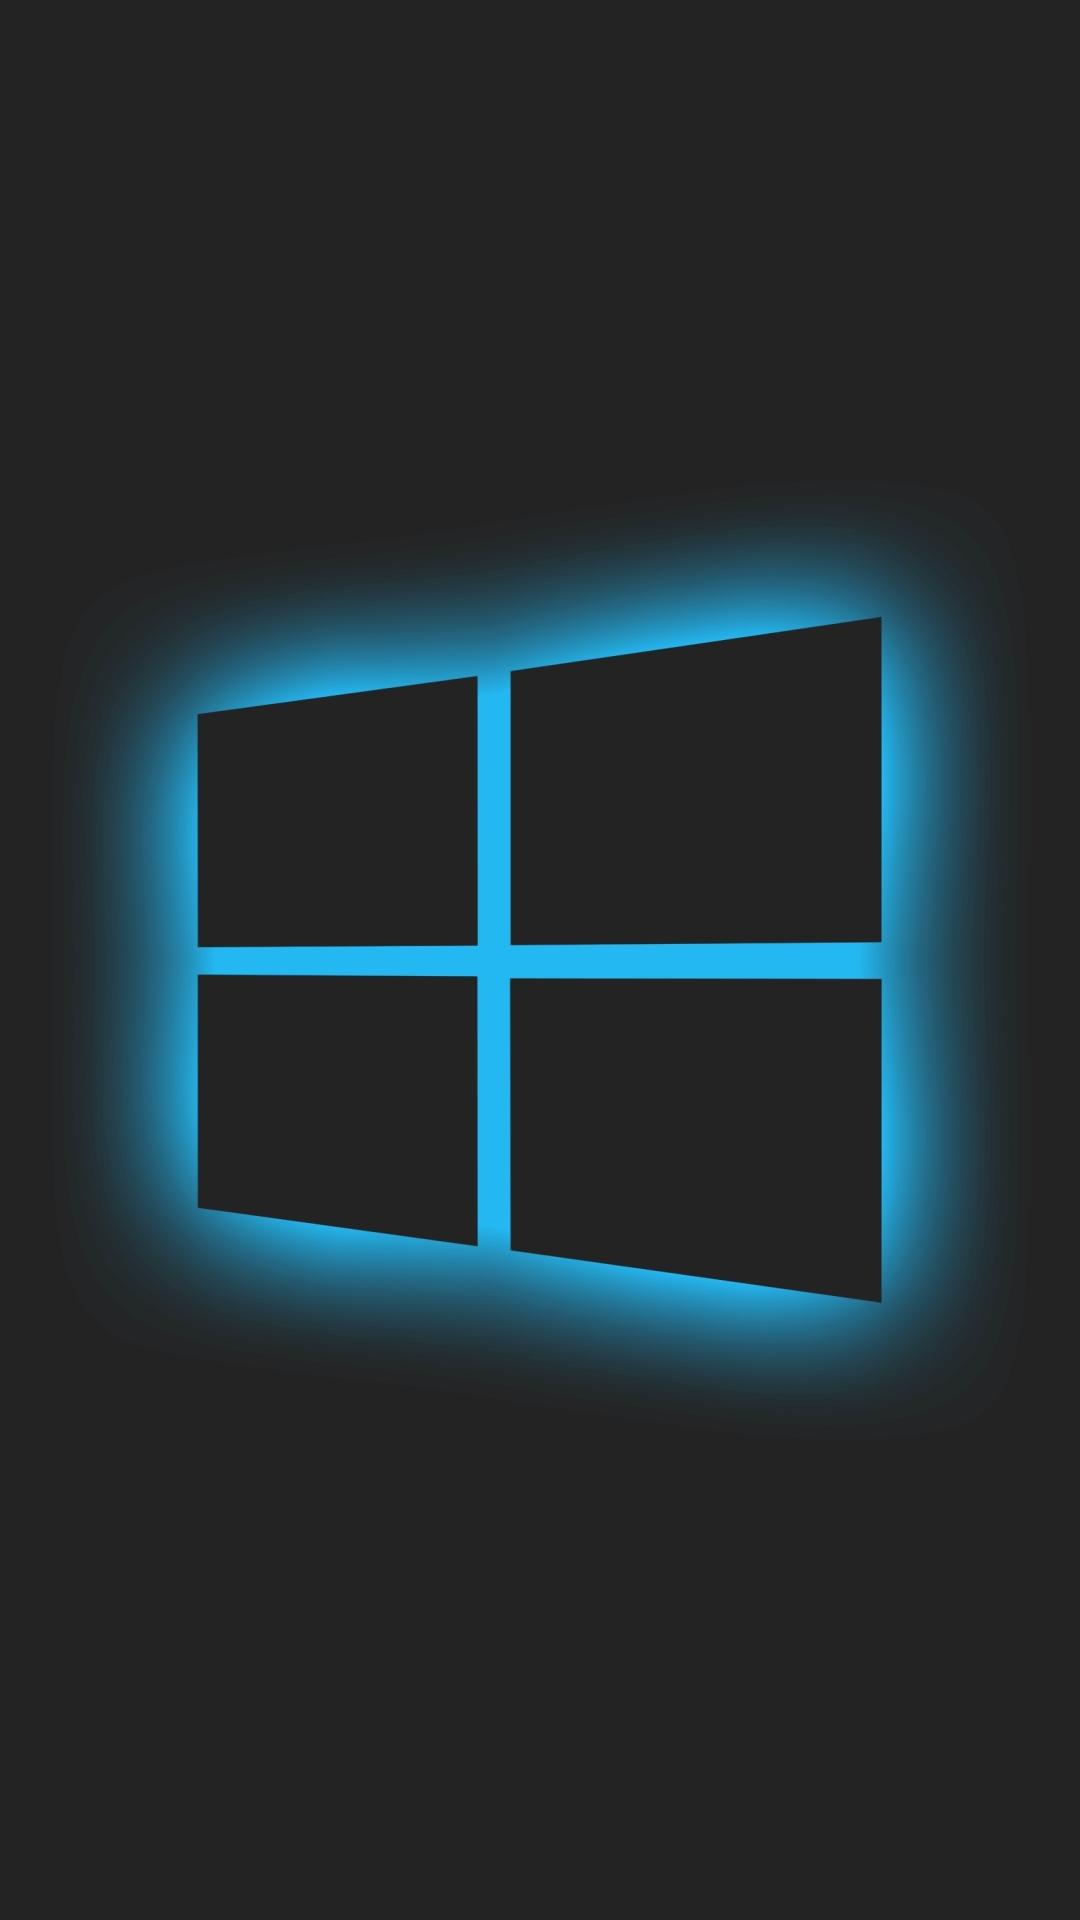 1080x1920 Windows 10 Logo Blue Glow Iphone 7 6s 6 Plus And Pixel Xl